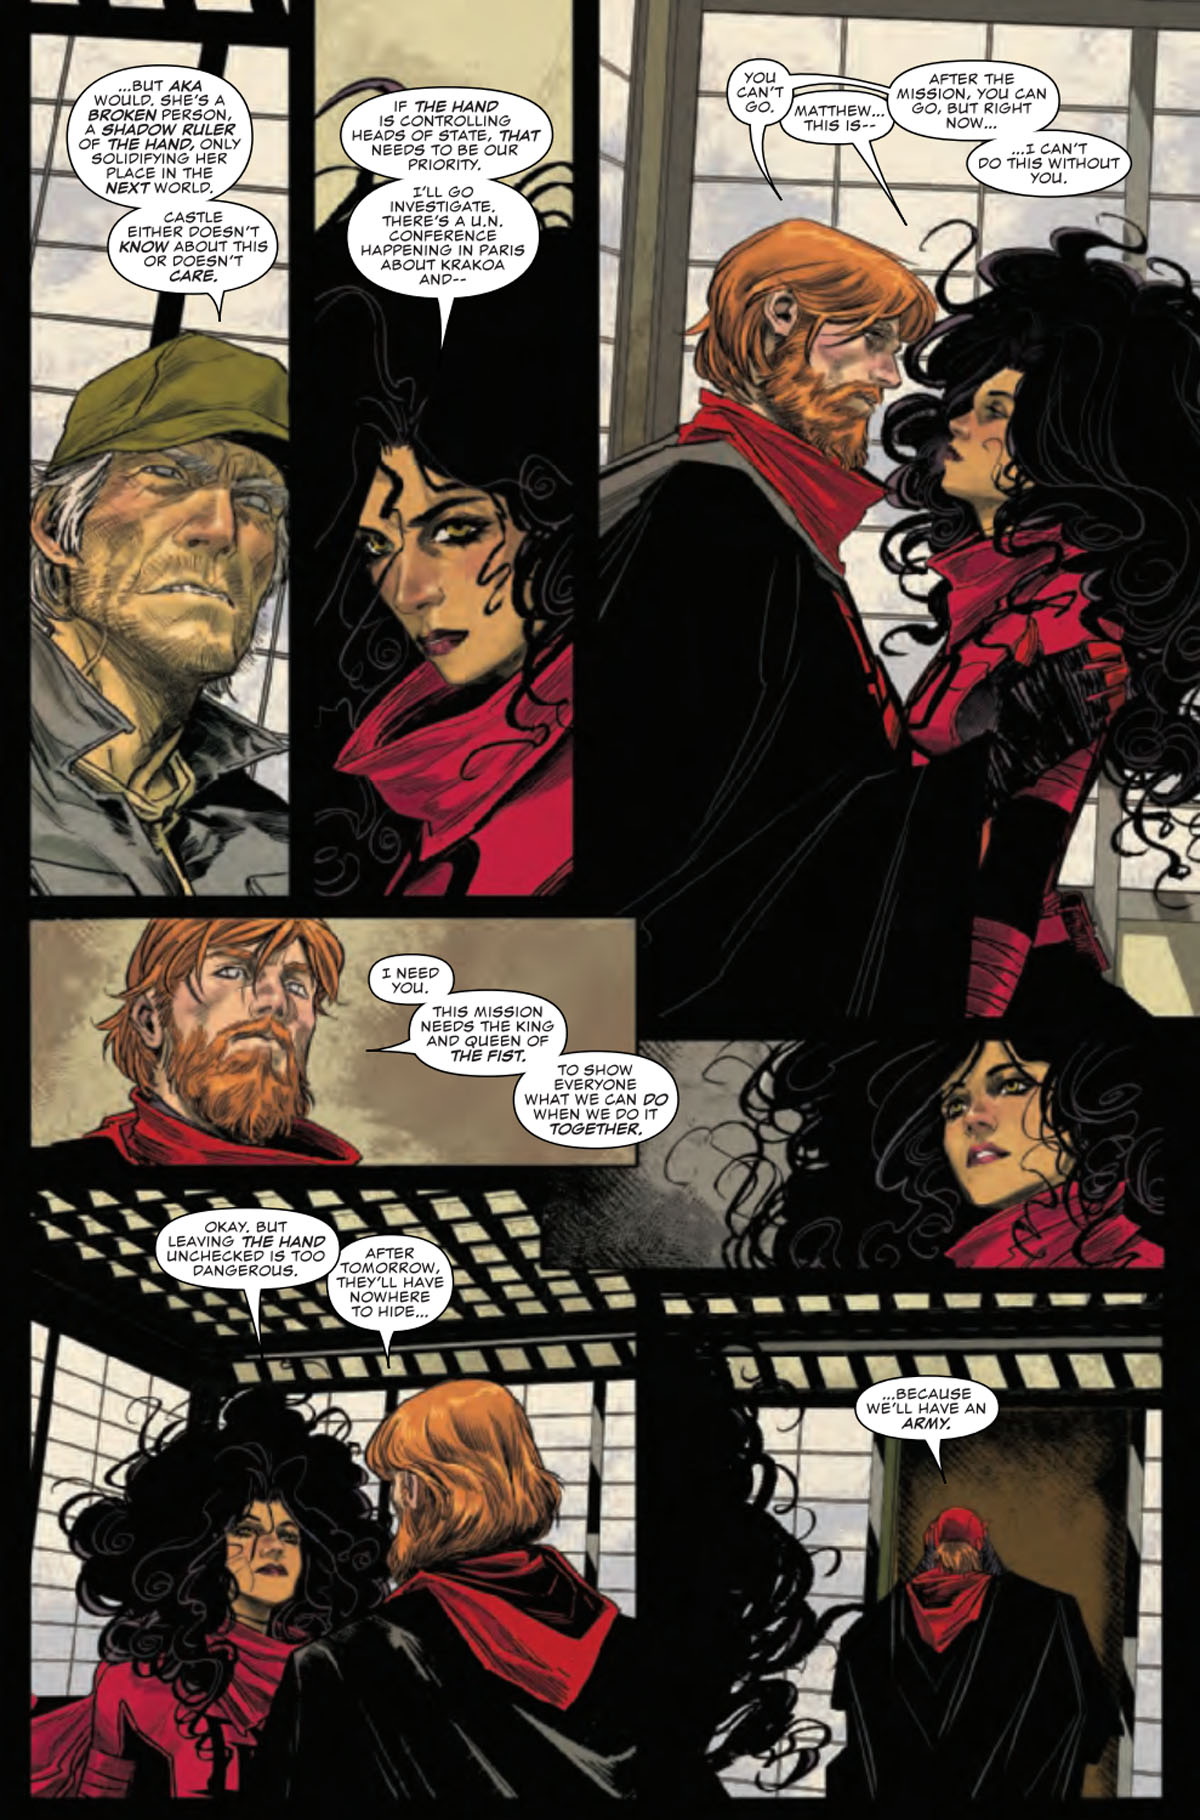 Daredevil #5 page 4